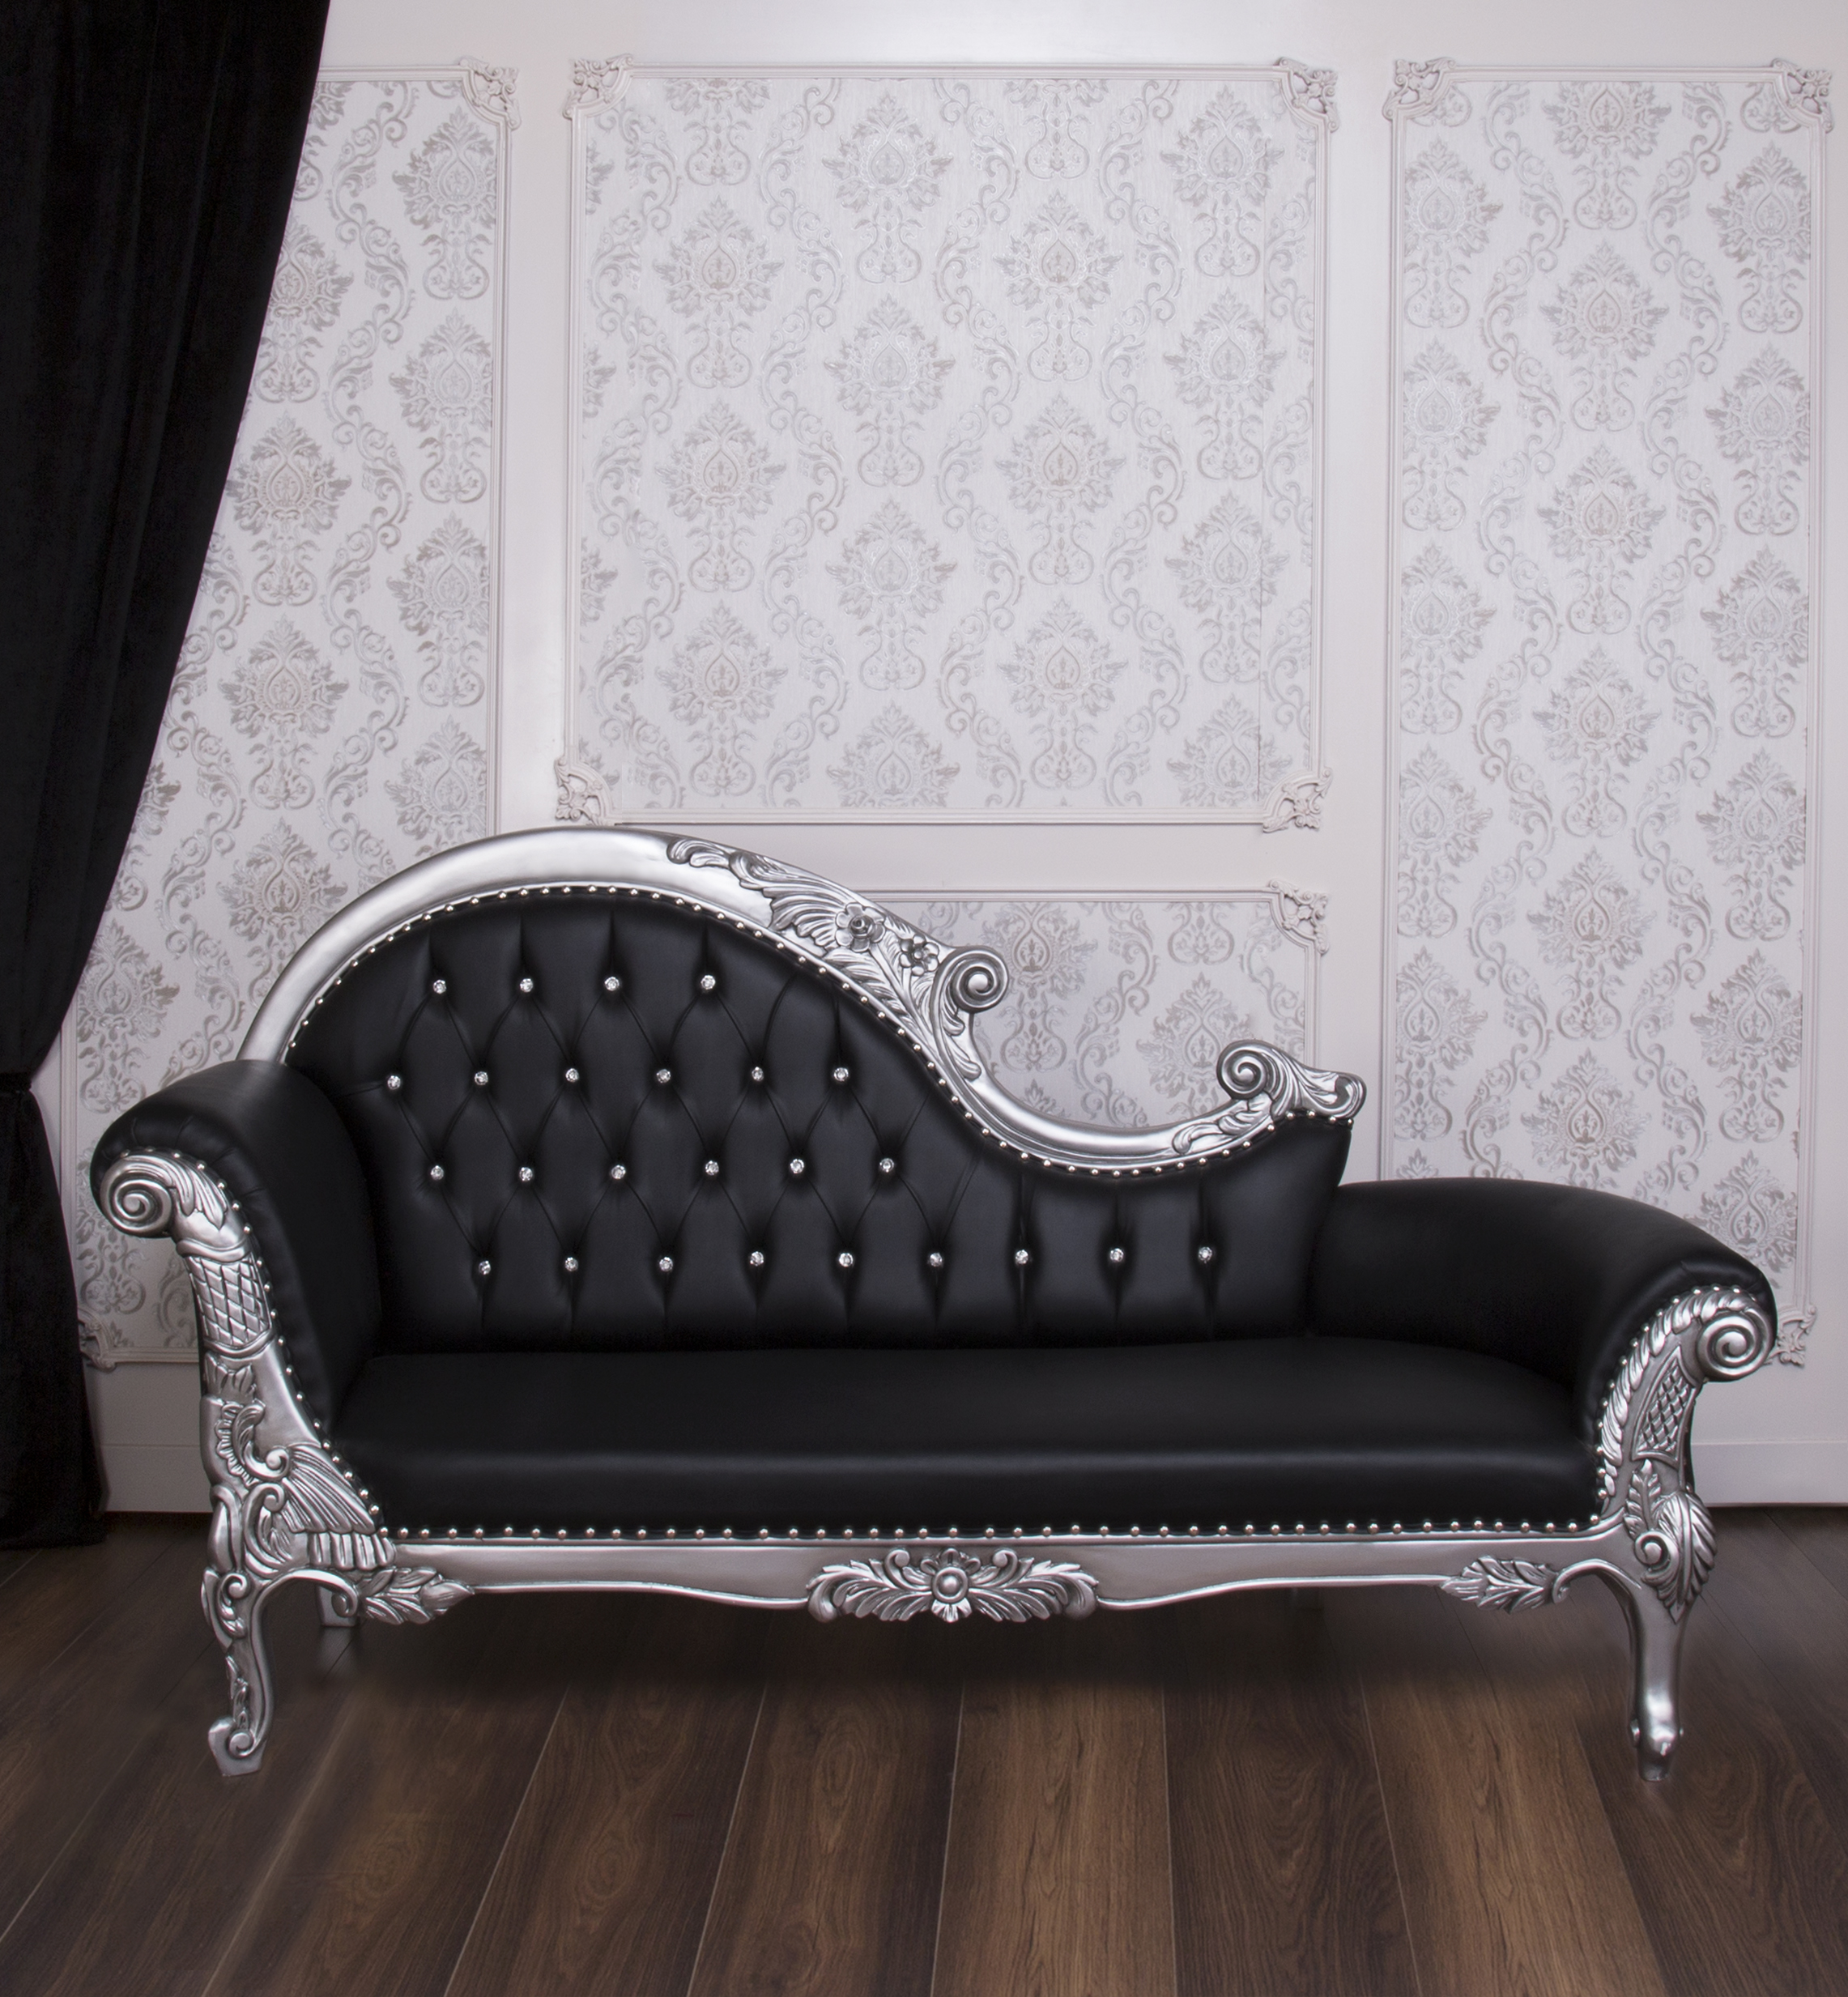 Silver & Black Leather Nefertiti Chaise Lounge